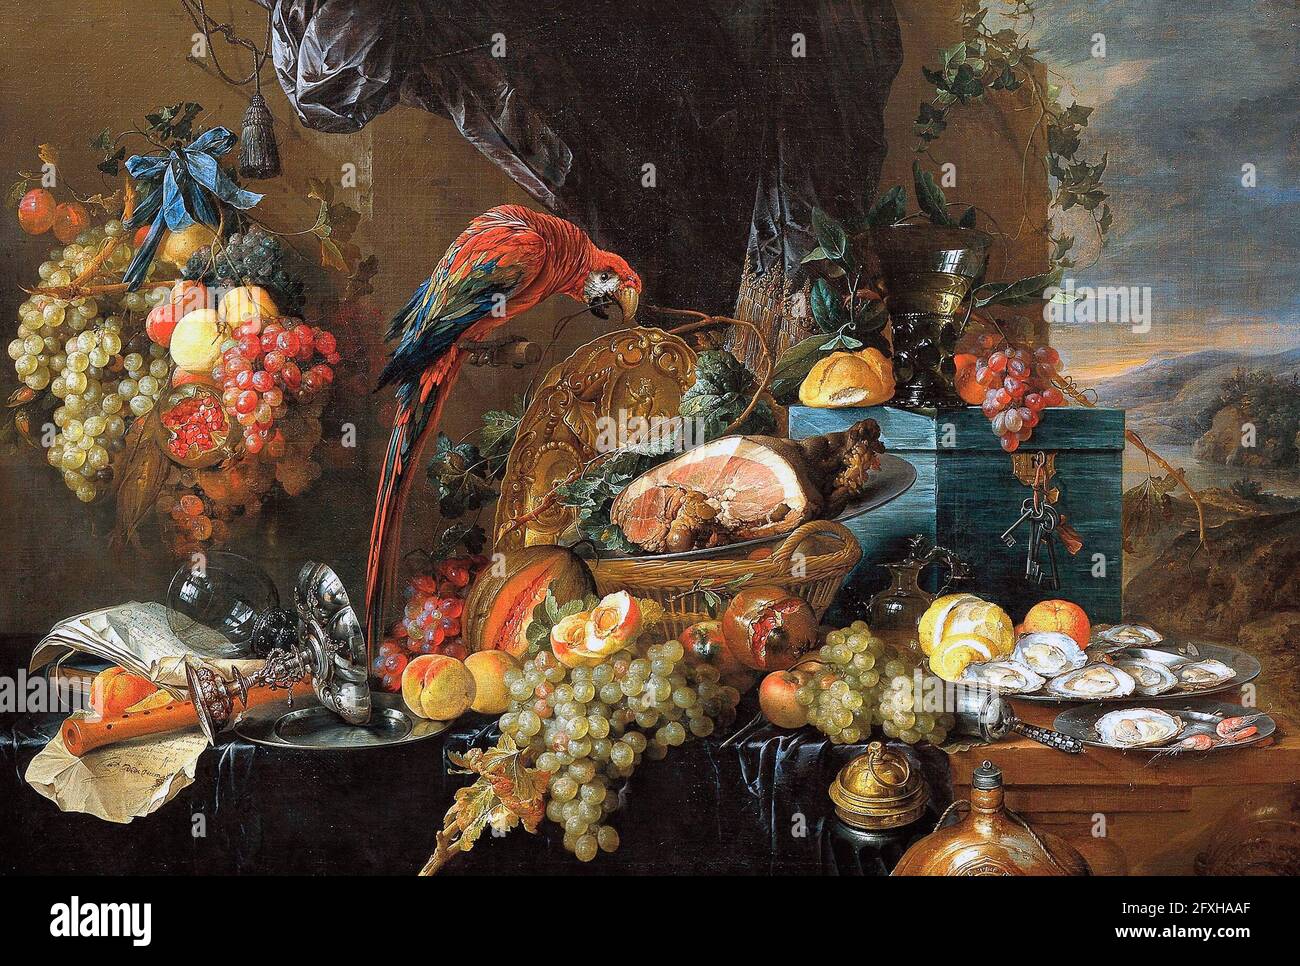 Abbondante vita morta con un pappagallo - Jan Davidsz. De Heem, circa 1650 Foto Stock